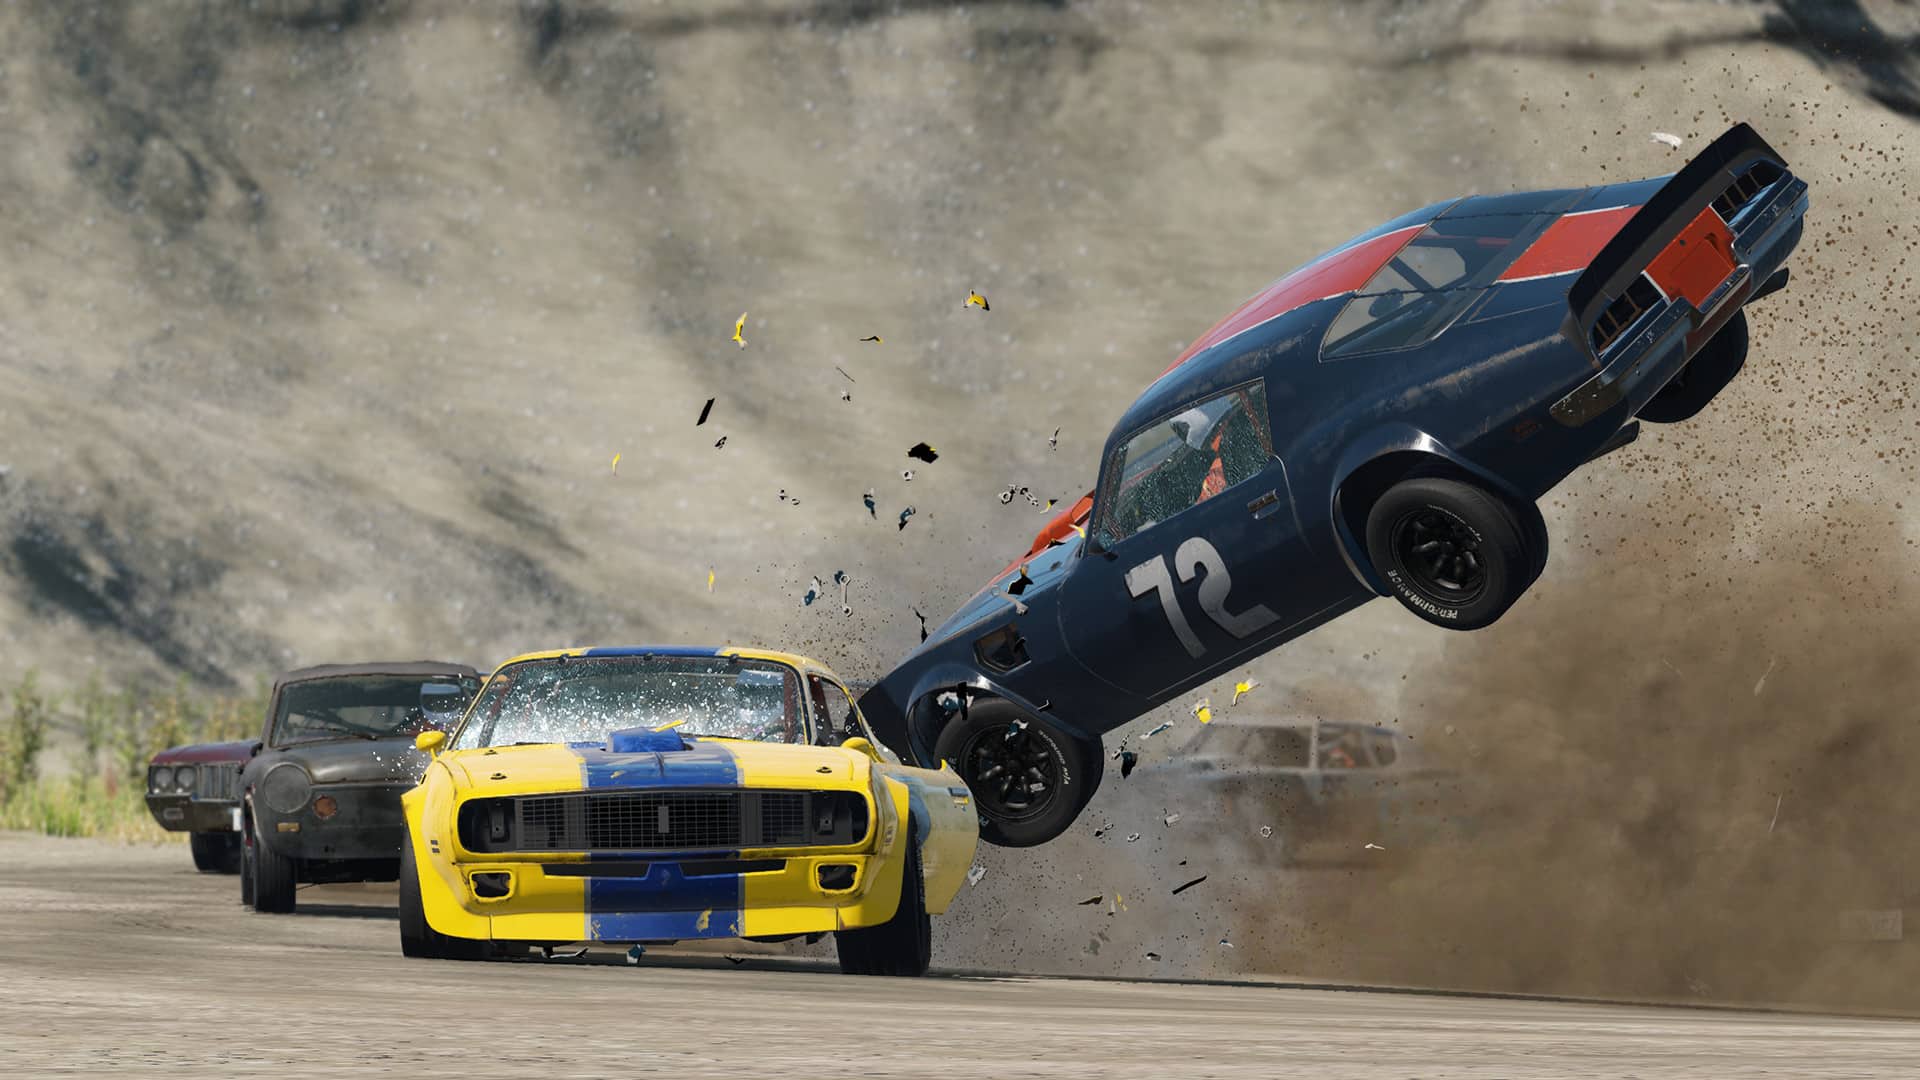 Next Car Game Ps4 Wallpaper - Wreckfest Xbox One Review - HD Wallpaper 